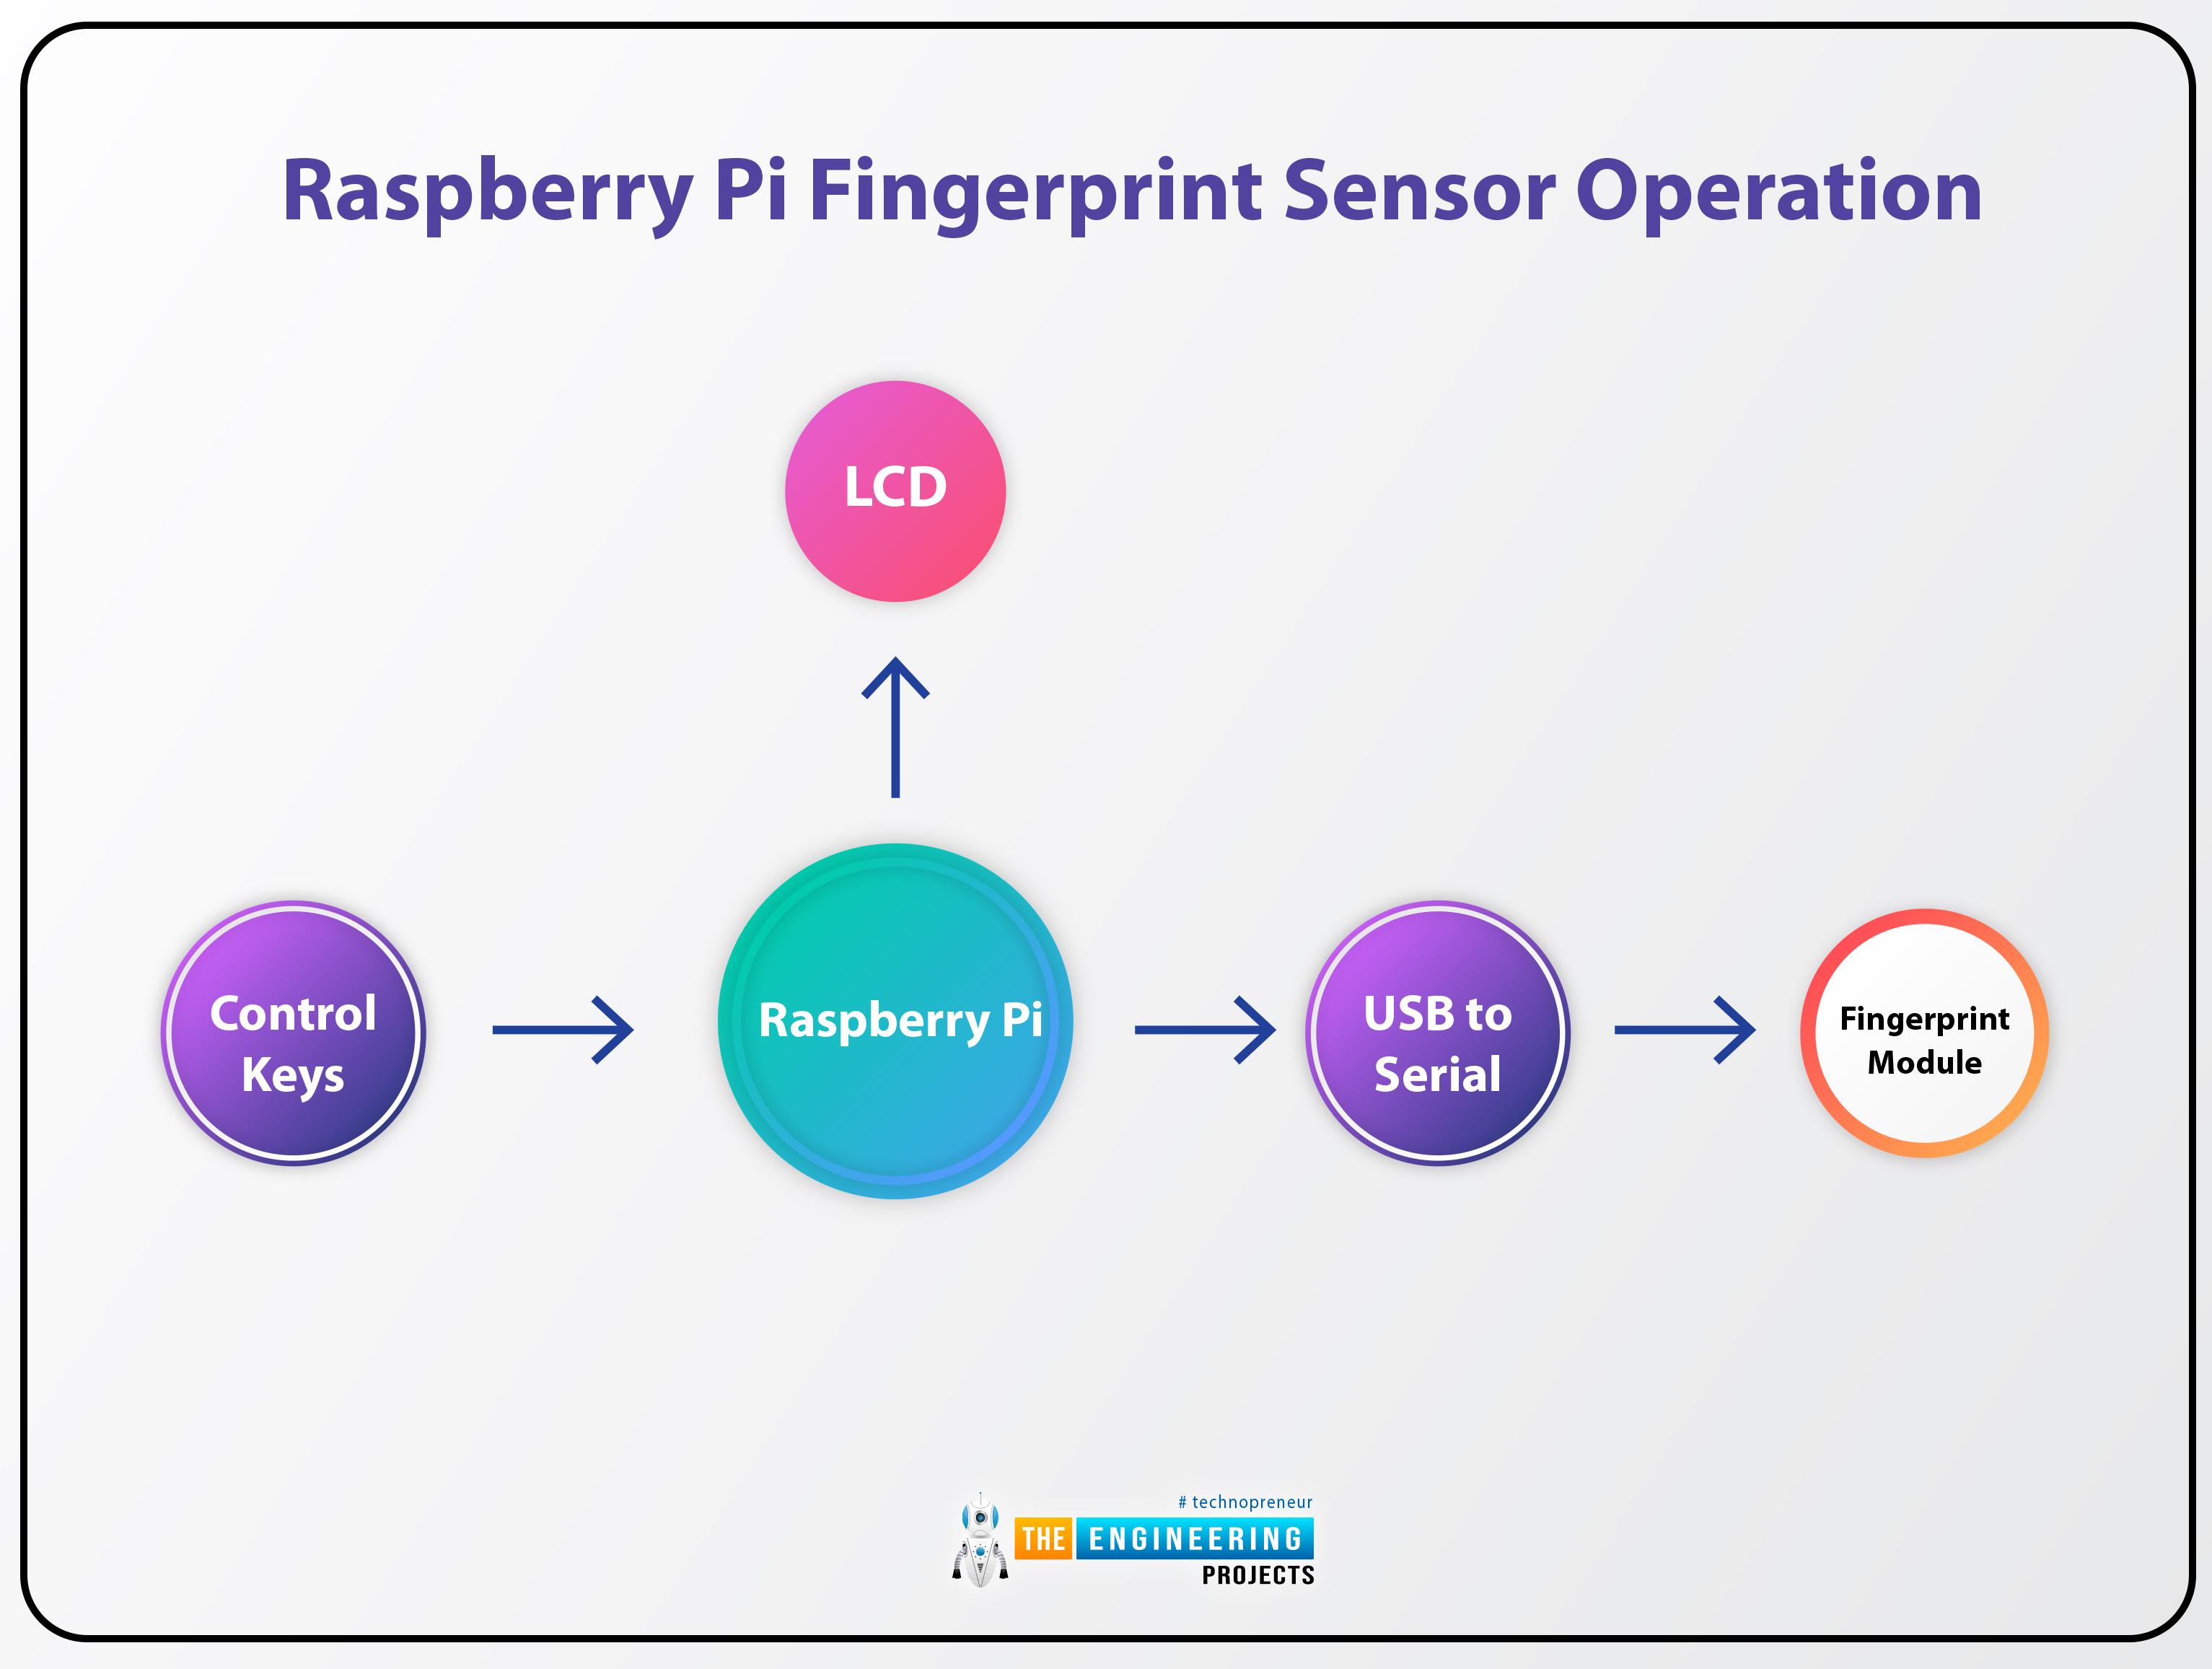 Interface a Fingerprint Sensor with Raspberry Pi 4,fingerprint sensor with Rpi4, Rpi4 fingerprint sensor, raspberry pi fingerprint scanner